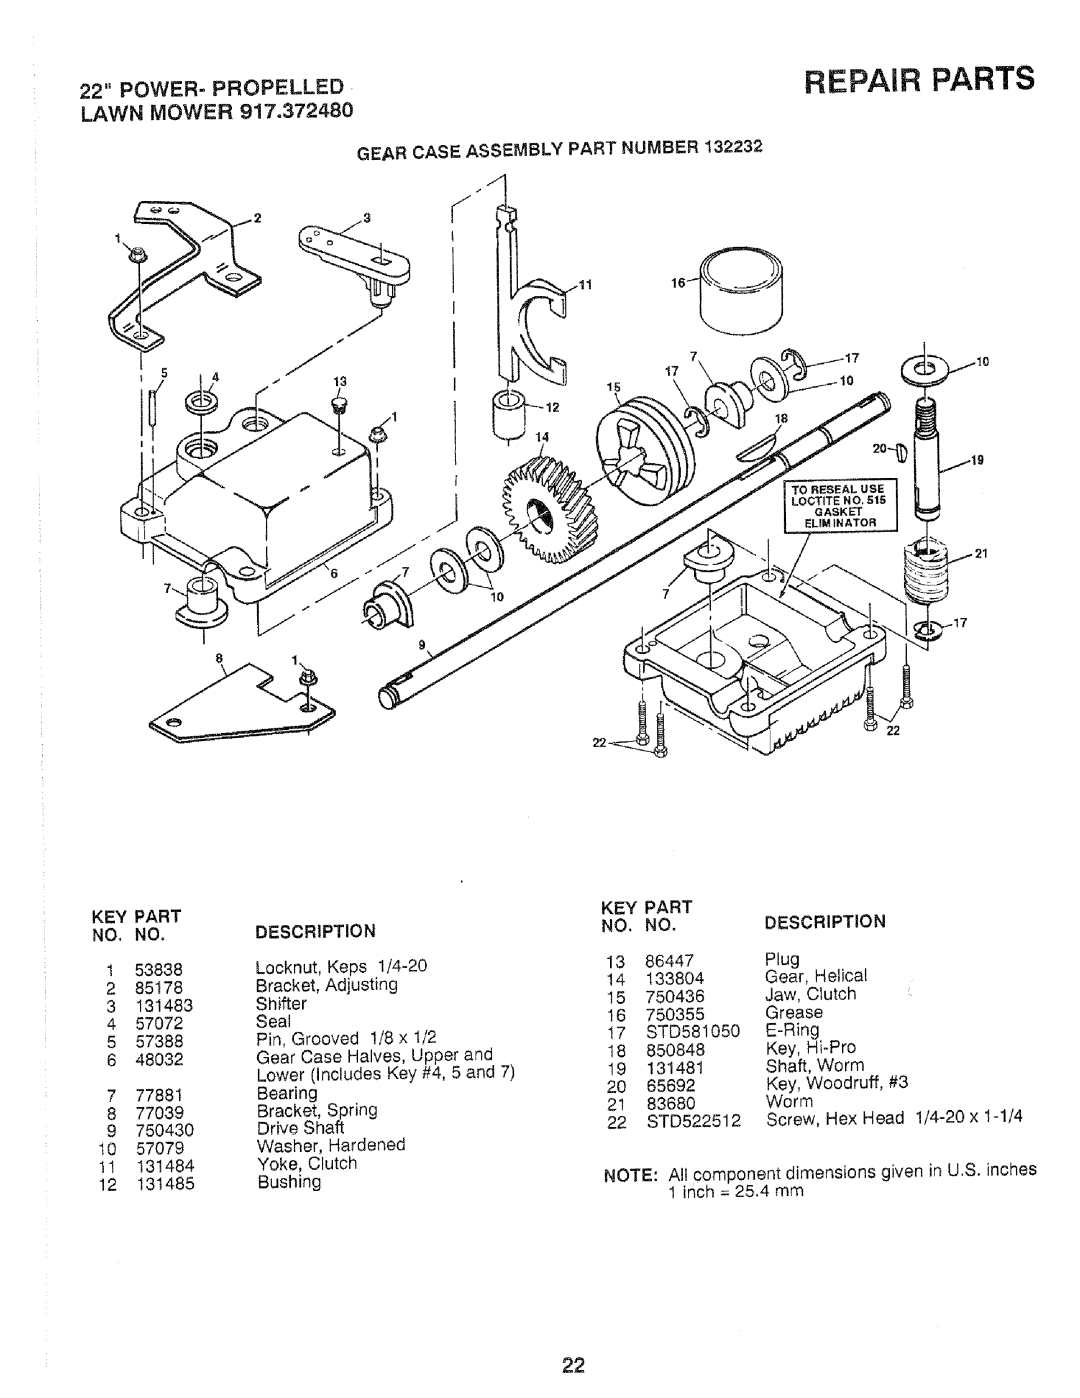 Craftsman 917.37248 Repair Parts, Power- Propelled Lawn Mower, Gear Case Assembly Part Number, Key Part, Description 